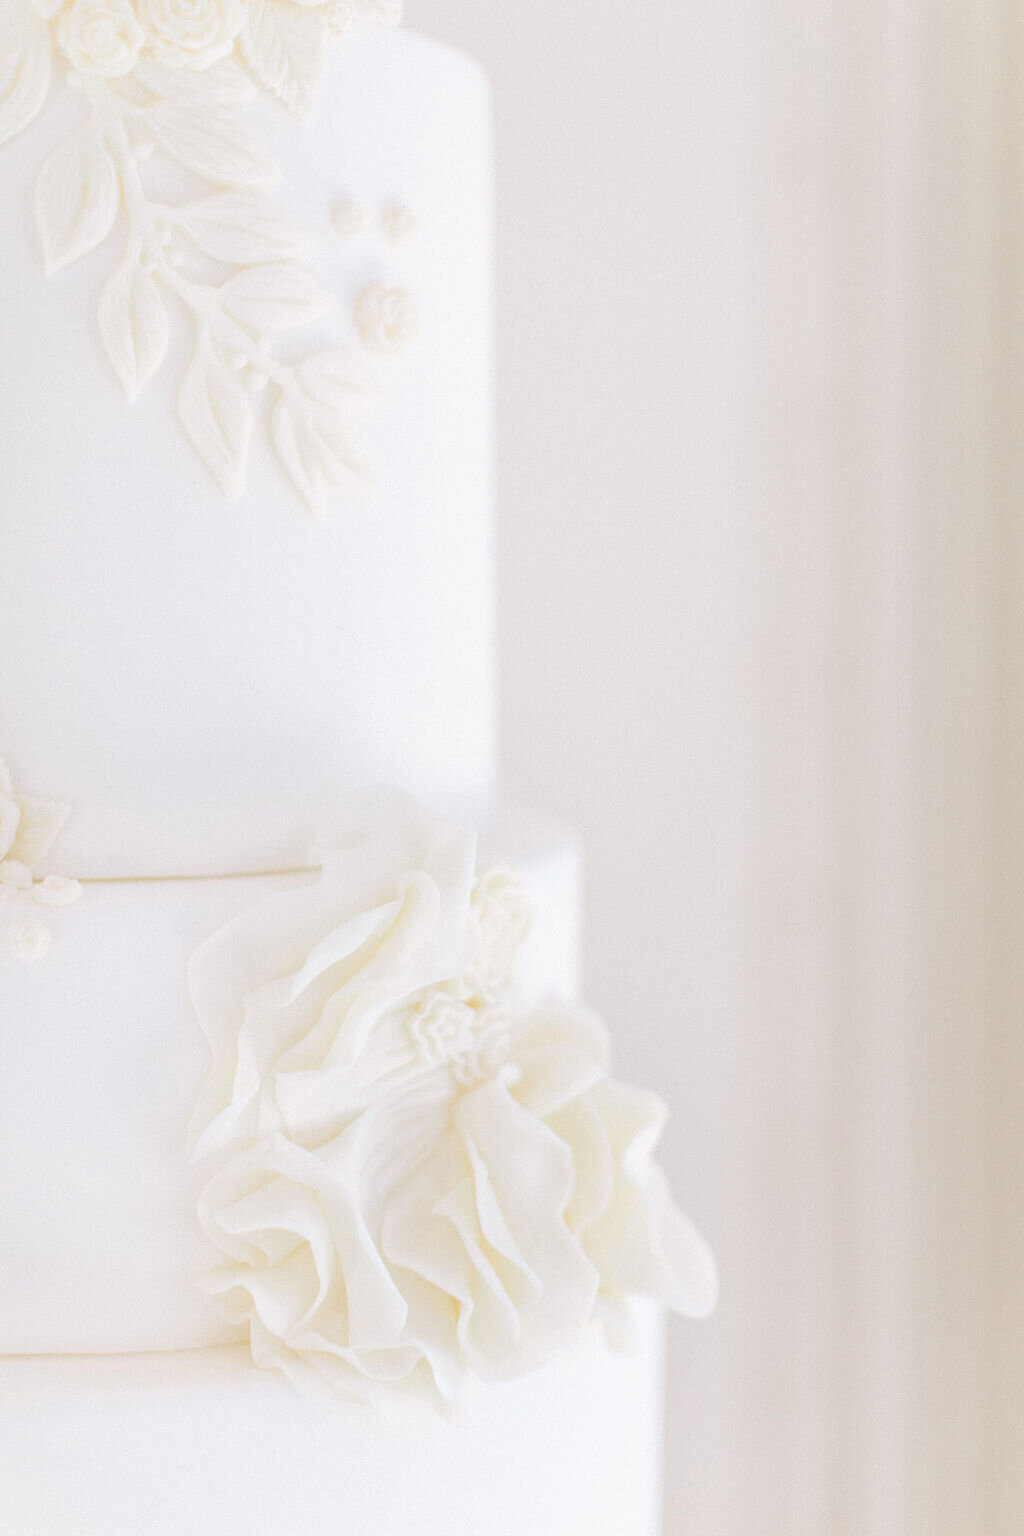 Plaster flowers on a wedding cake